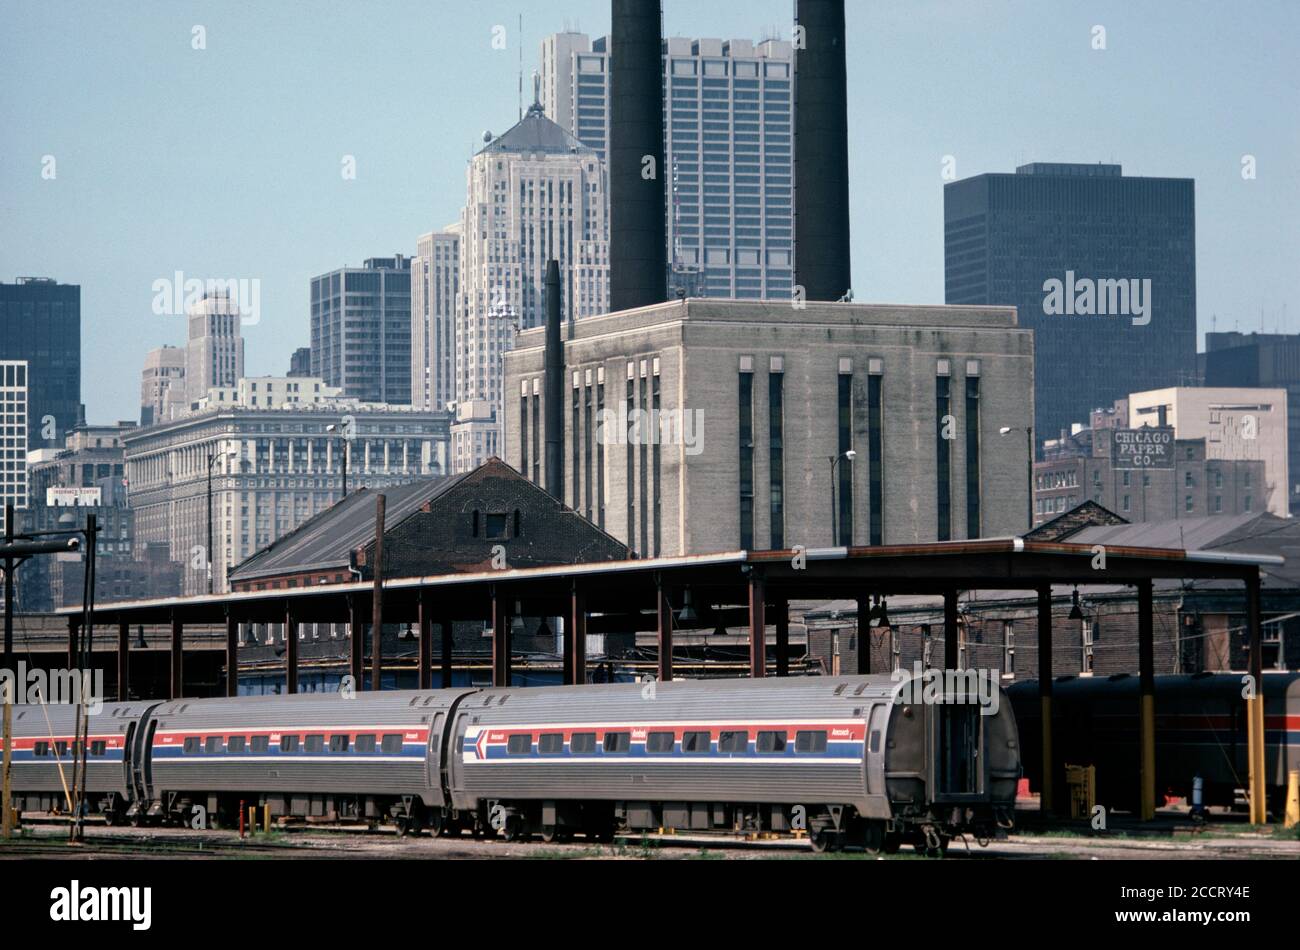 AMTRAK TRAIN IN RAILWAY SIDINGS, CHICAGO UNION STATION, ILLINOIS, USA, 1970s Stock Photo